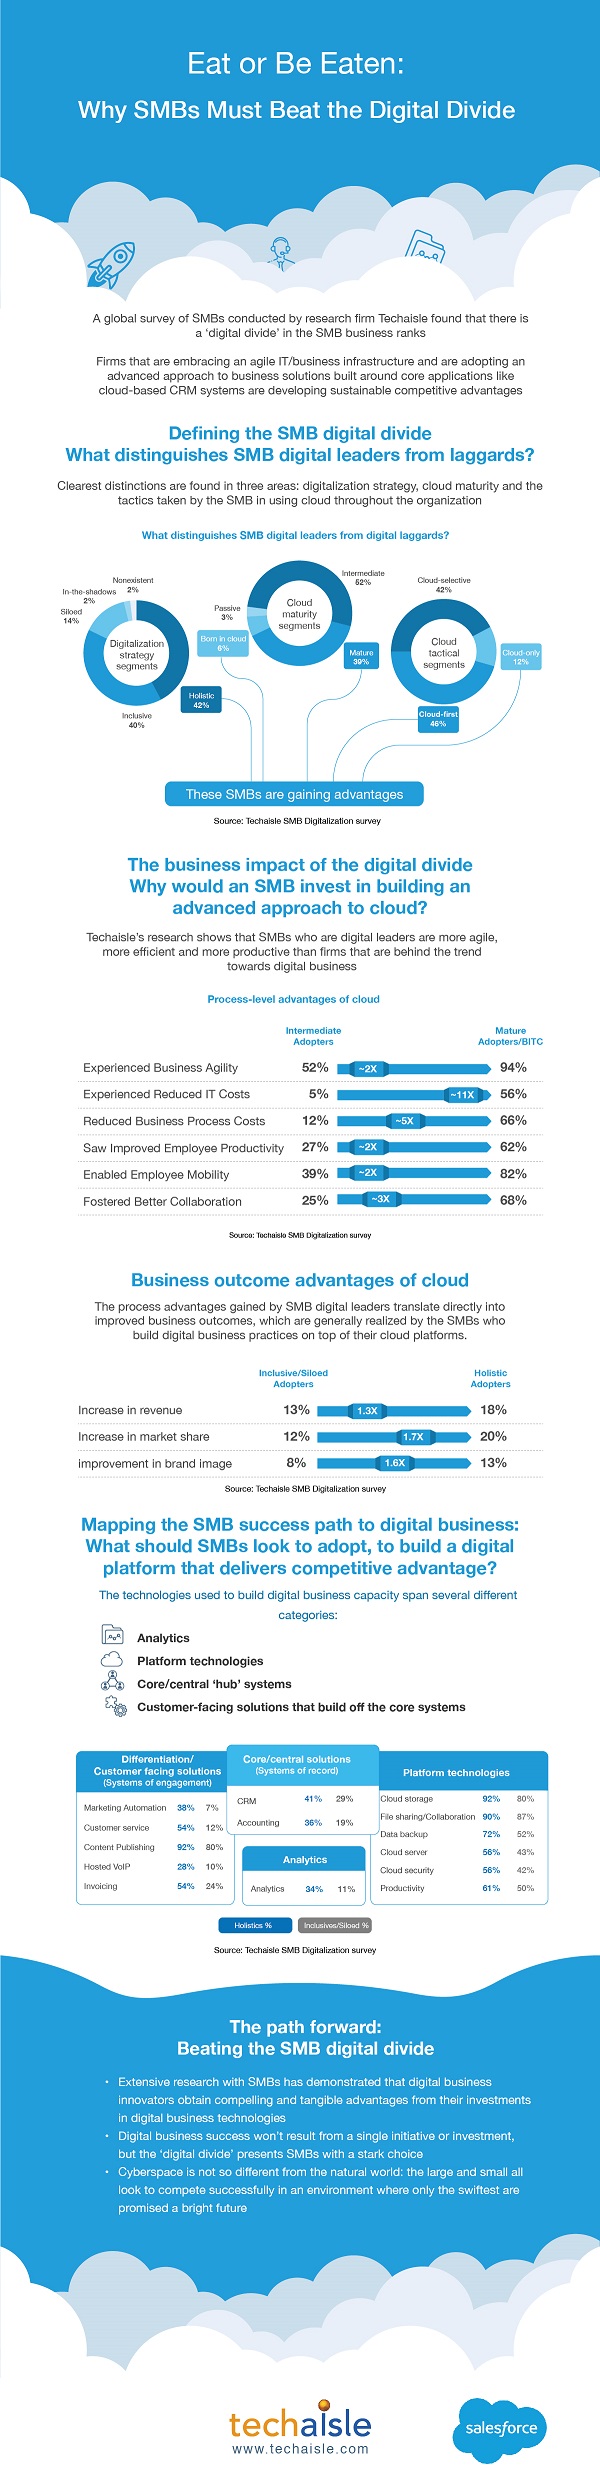 techaisle infographic smb digital divide salesforce low res